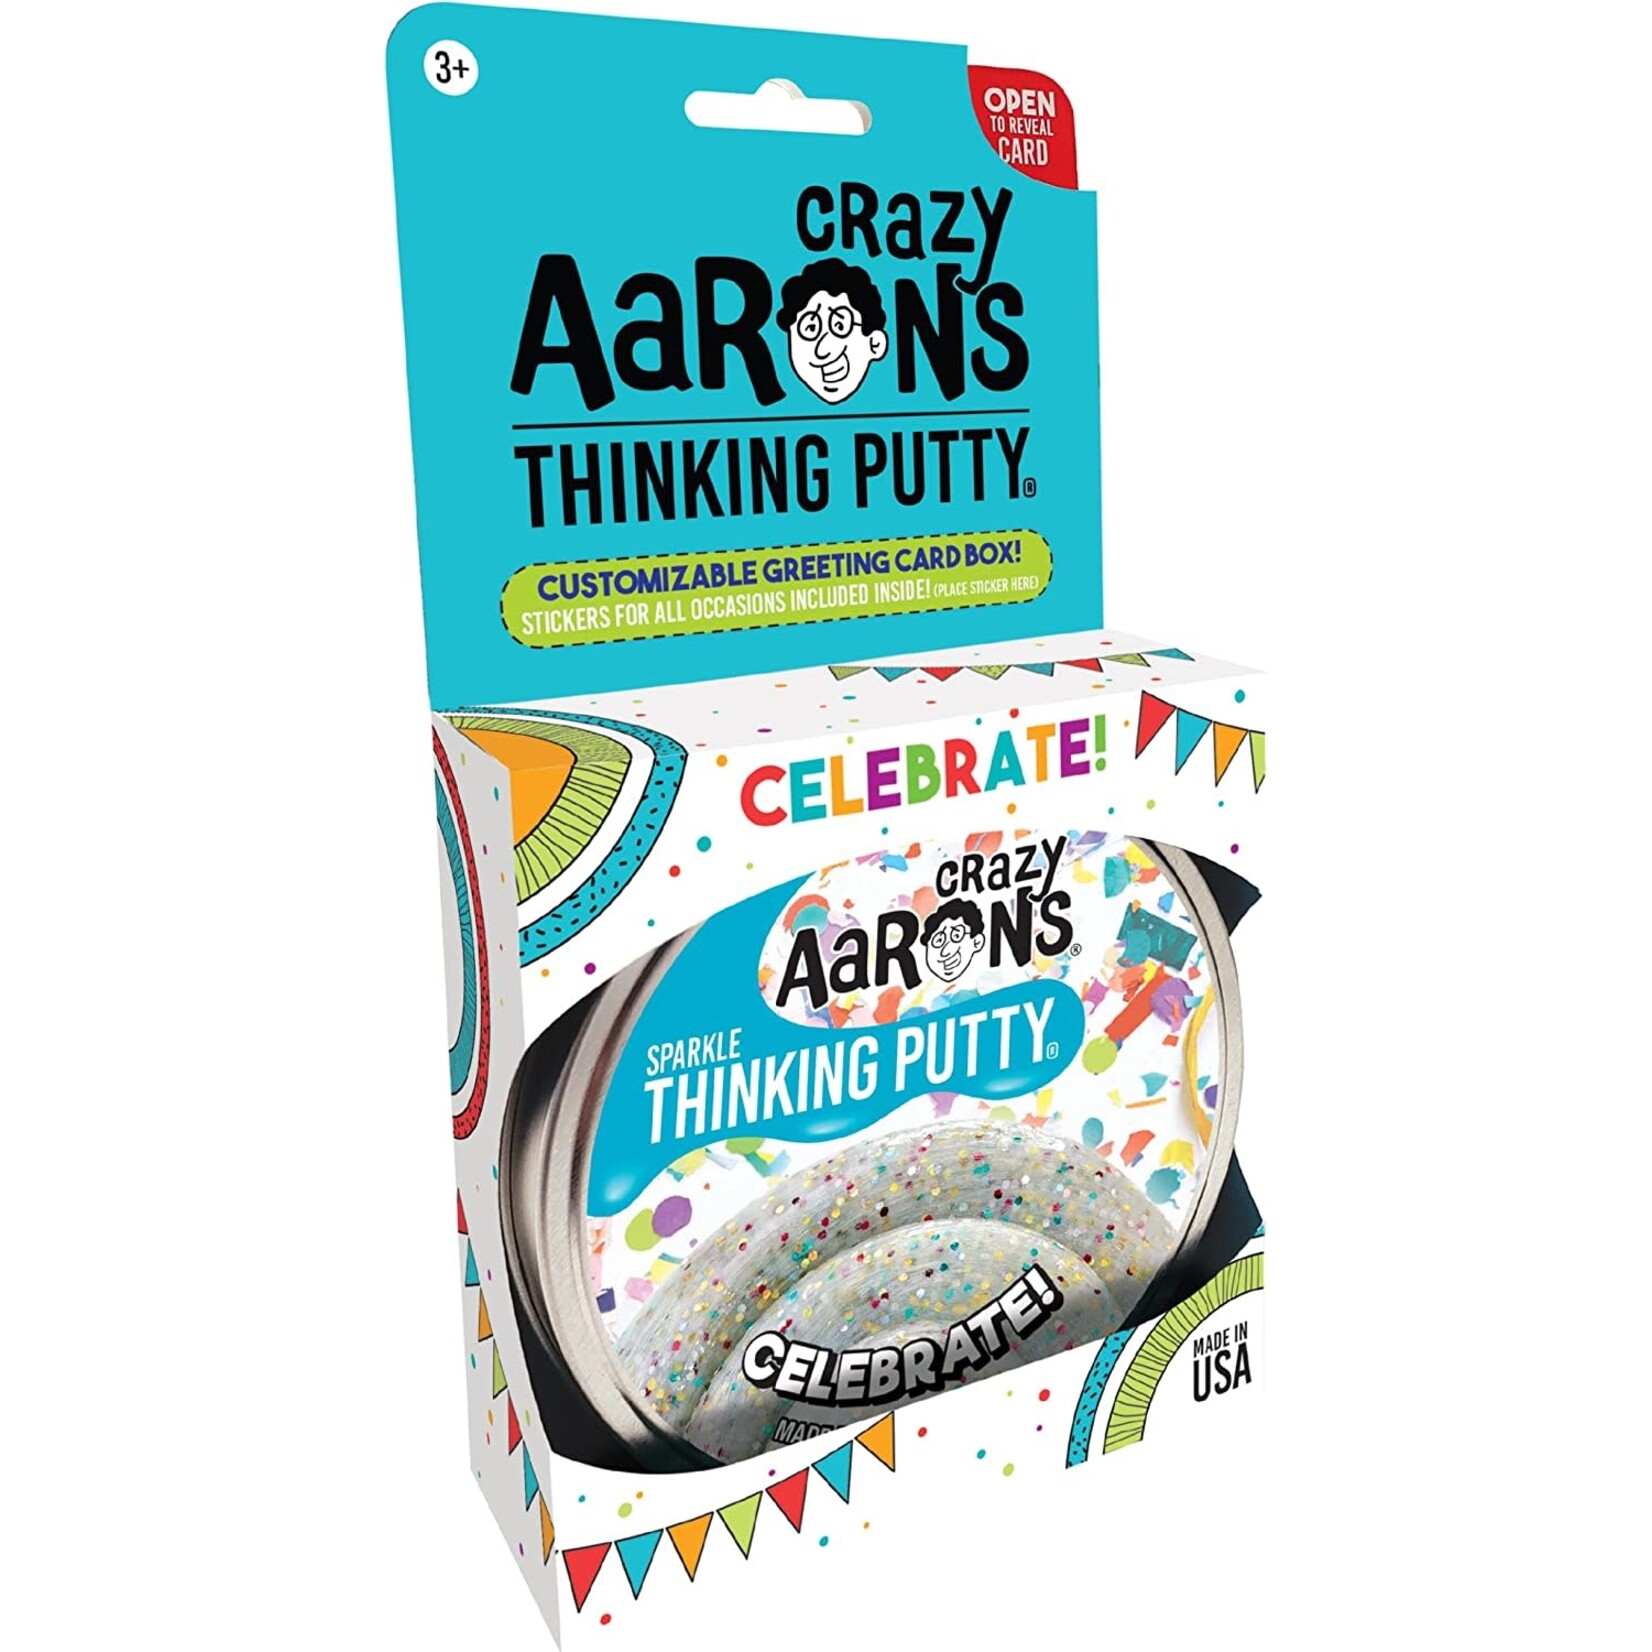 Crazy Aaron's Thinking Putty Celebrate! Thinking Putty